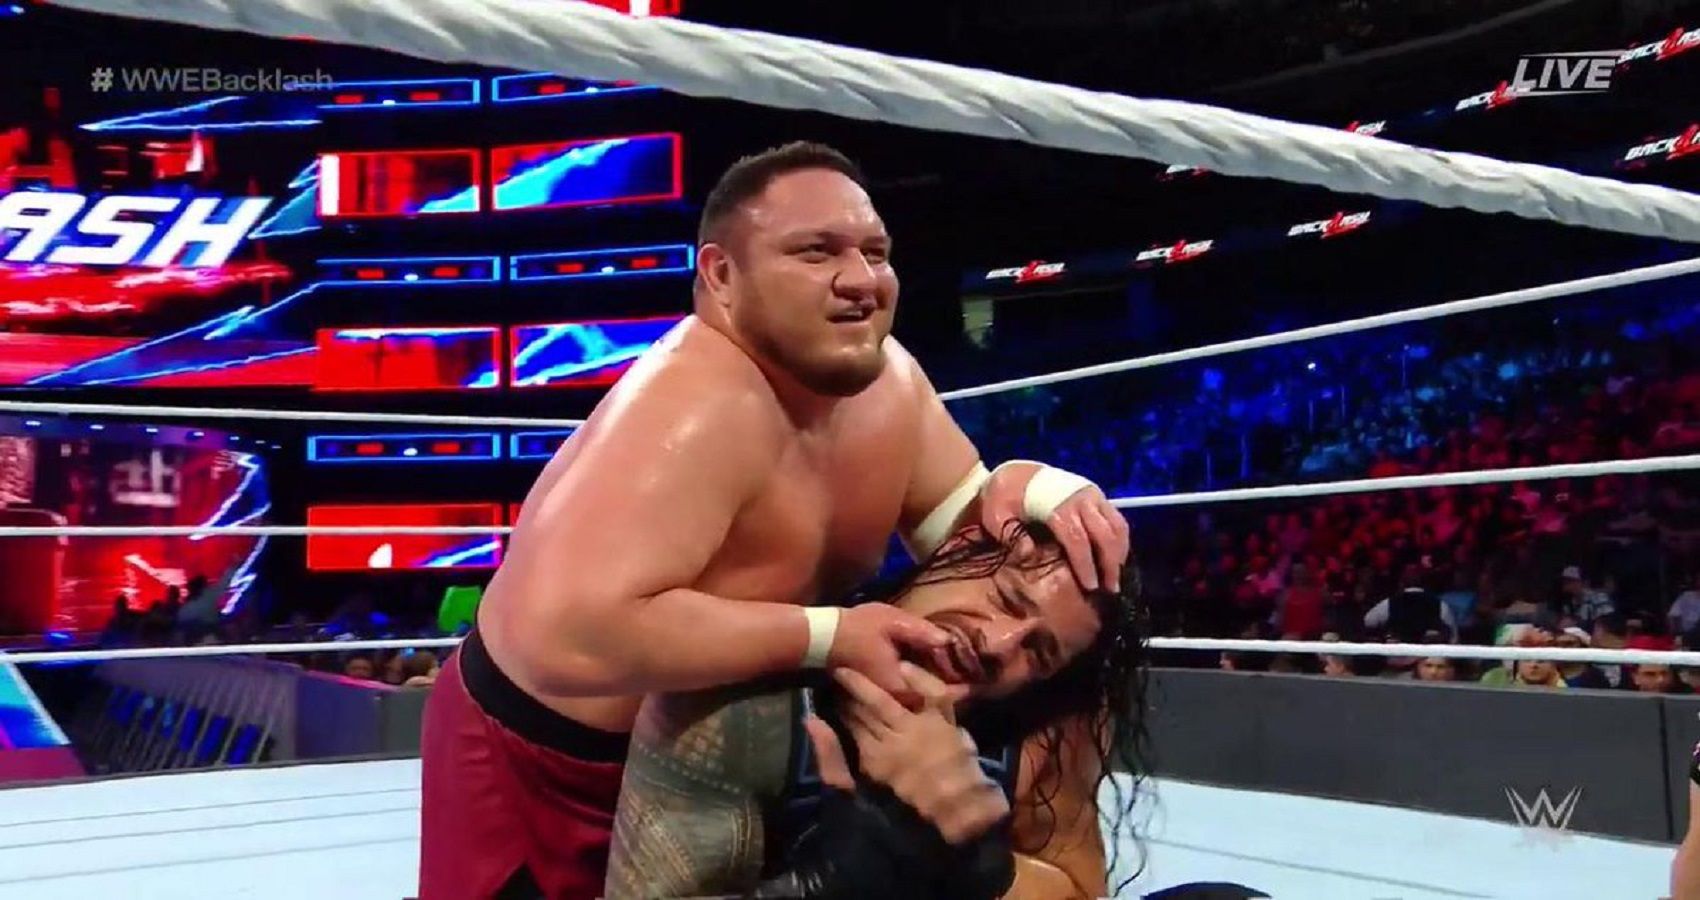 Backlash: Samoa Joe vs. Roman Reigns